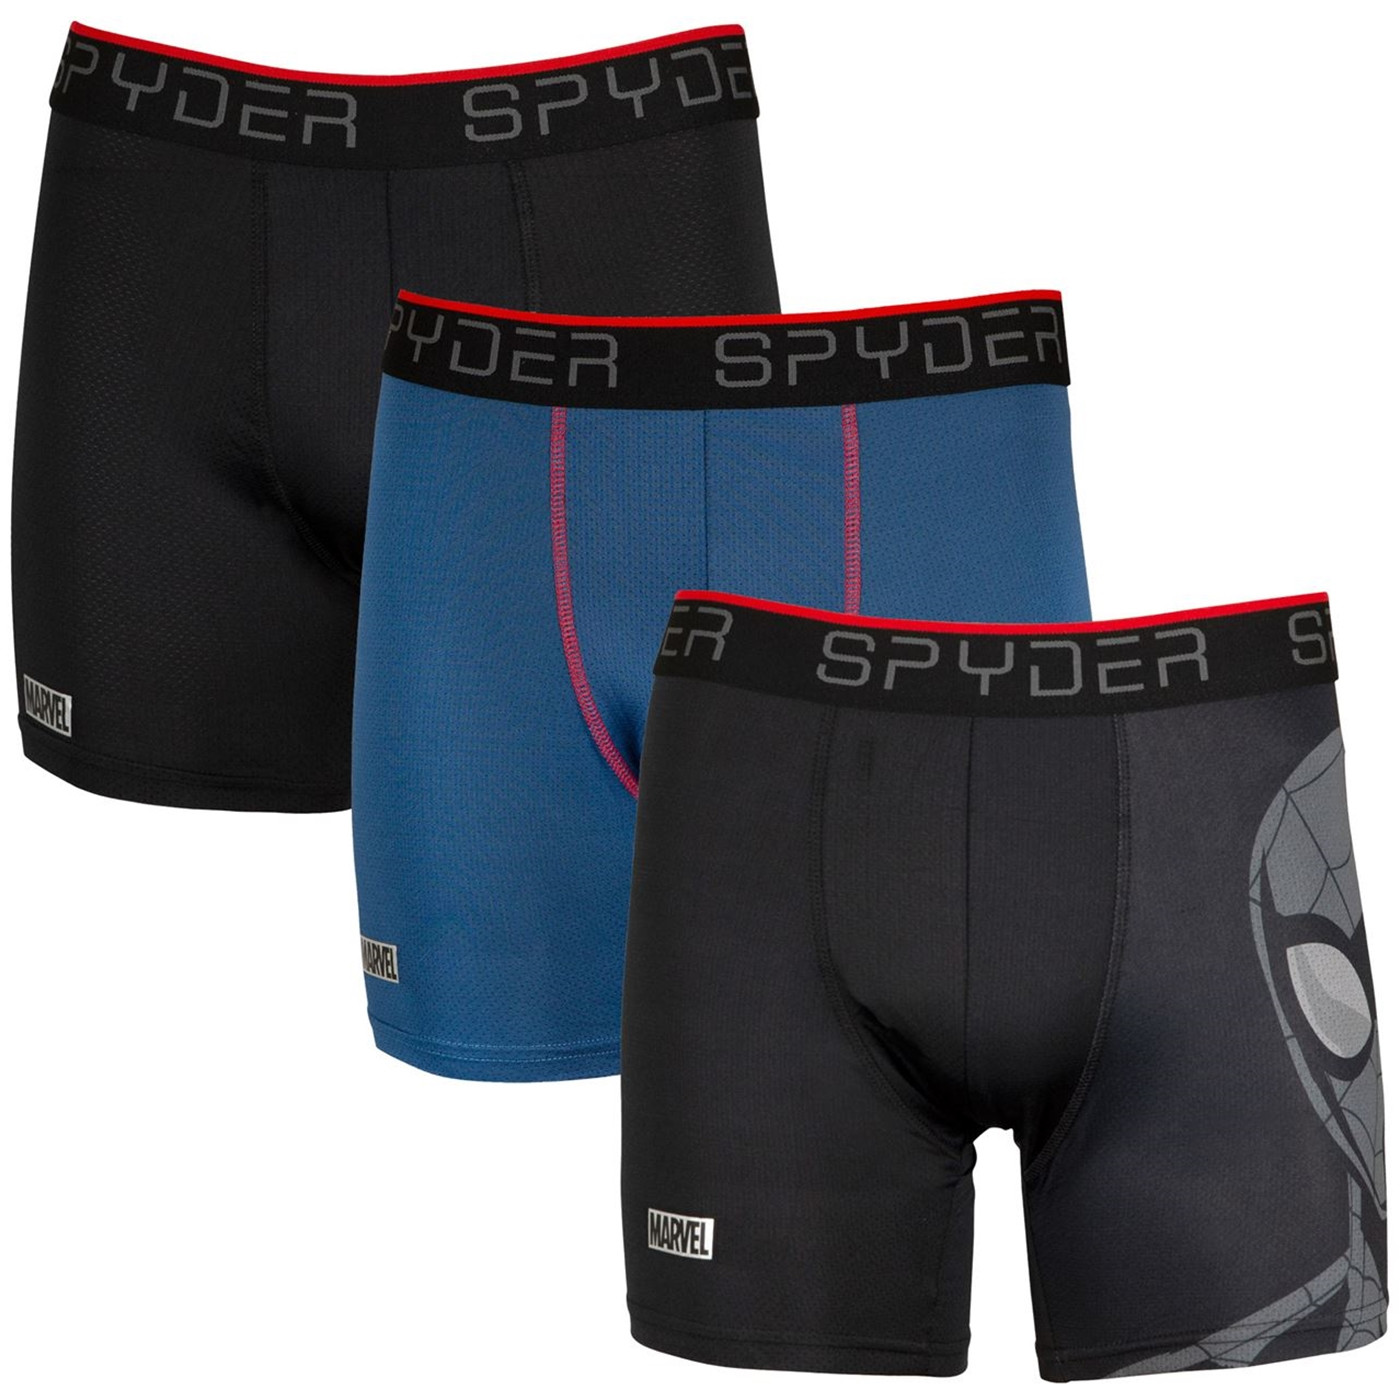 Punisher Spyder Performance Sports Boxer Briefs 3-Pair Pack